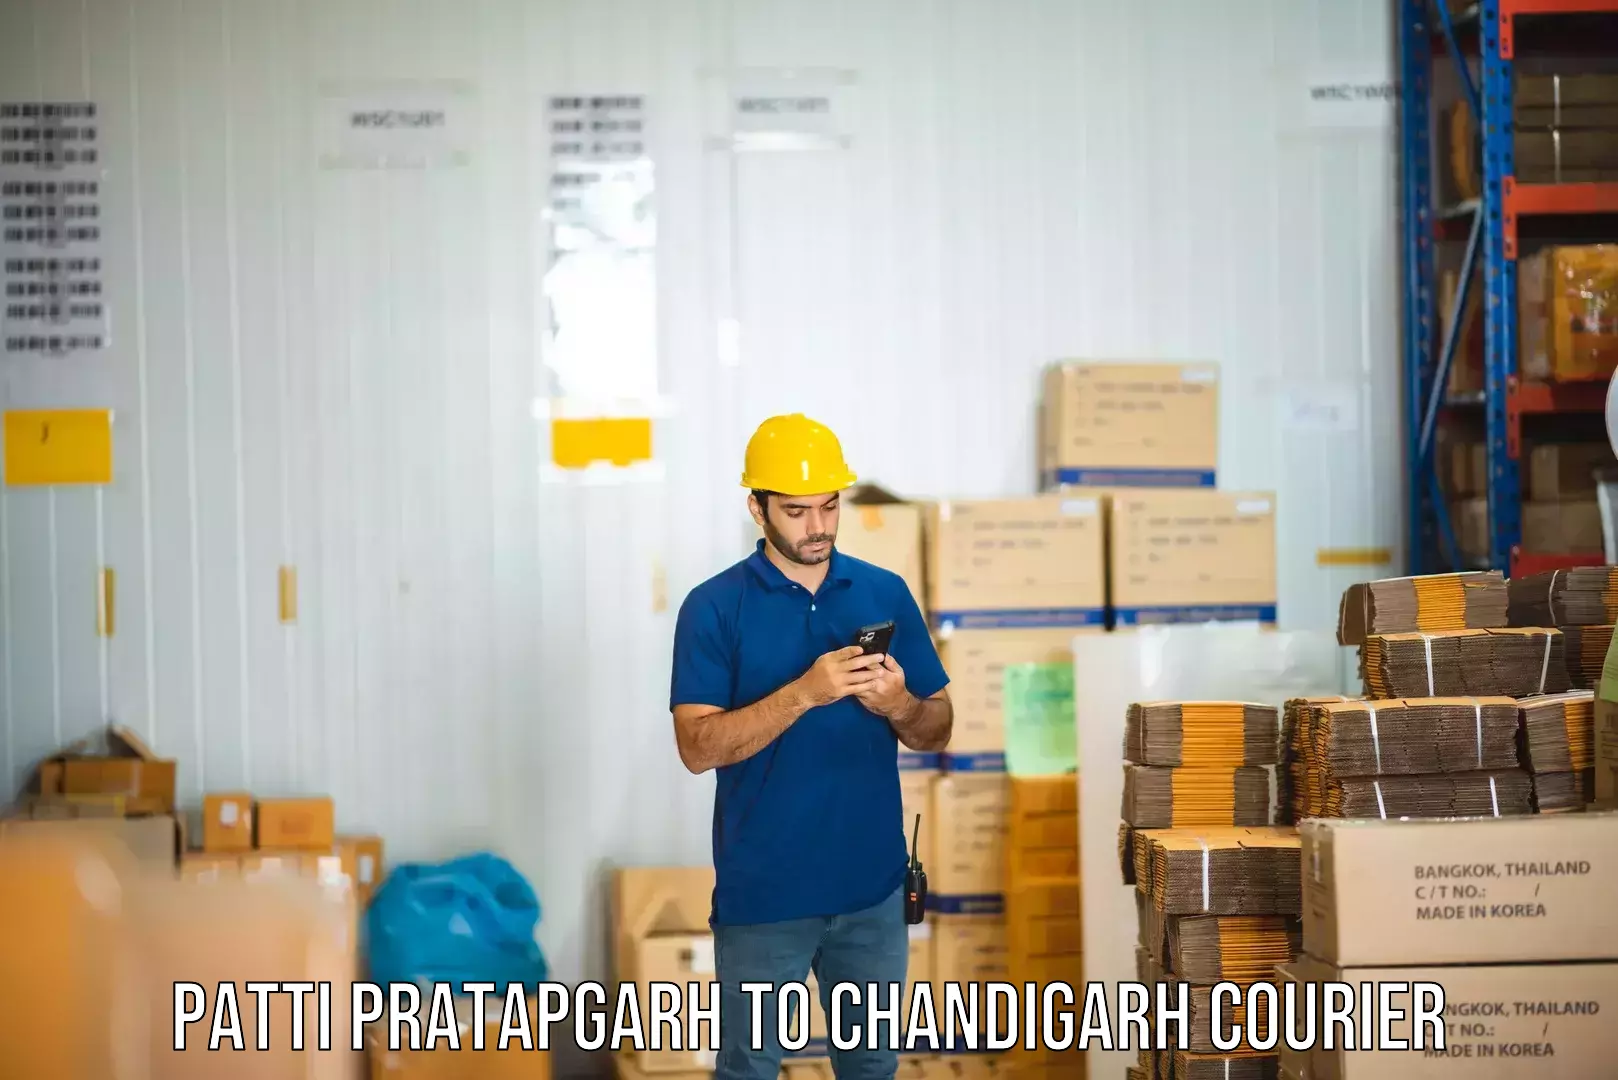 Professional courier handling Patti Pratapgarh to Chandigarh